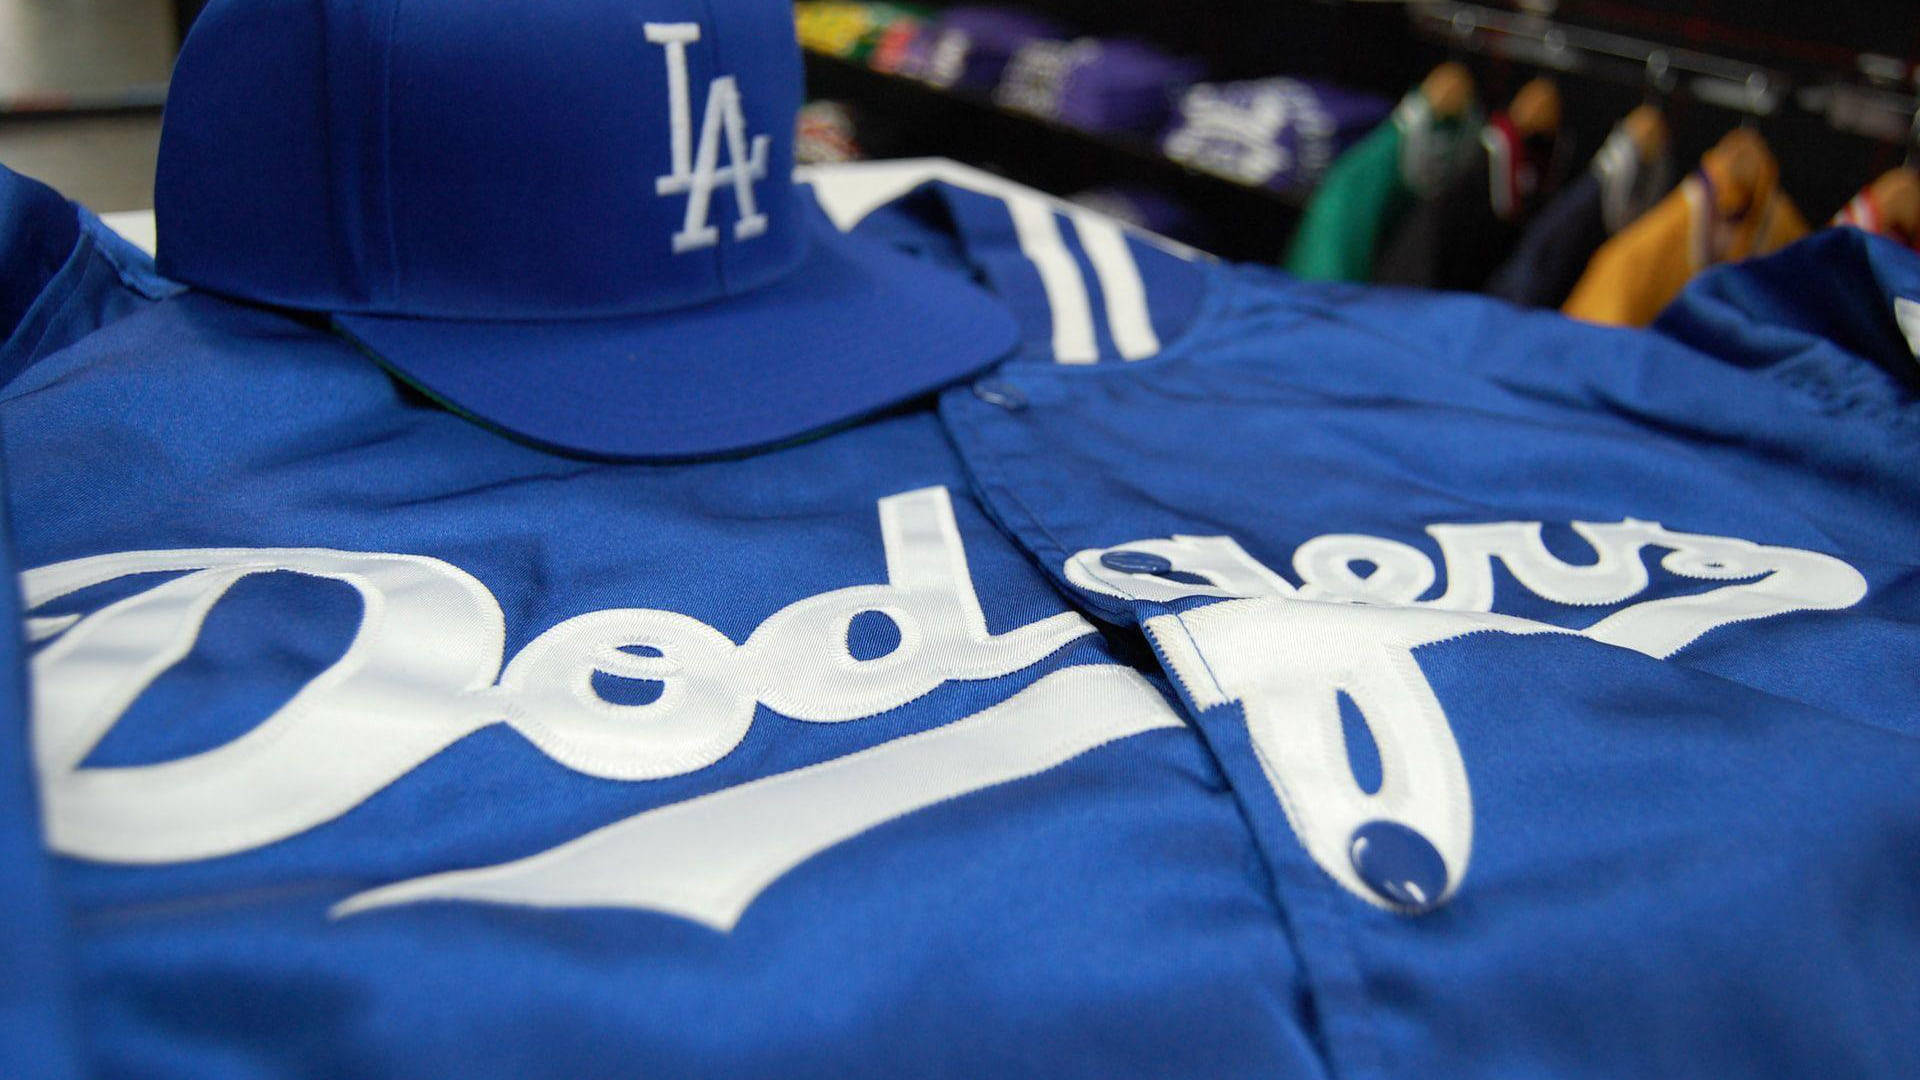 Dodgers wallpaper  Dodgers, Dodgers jerseys, Dodgers baseball